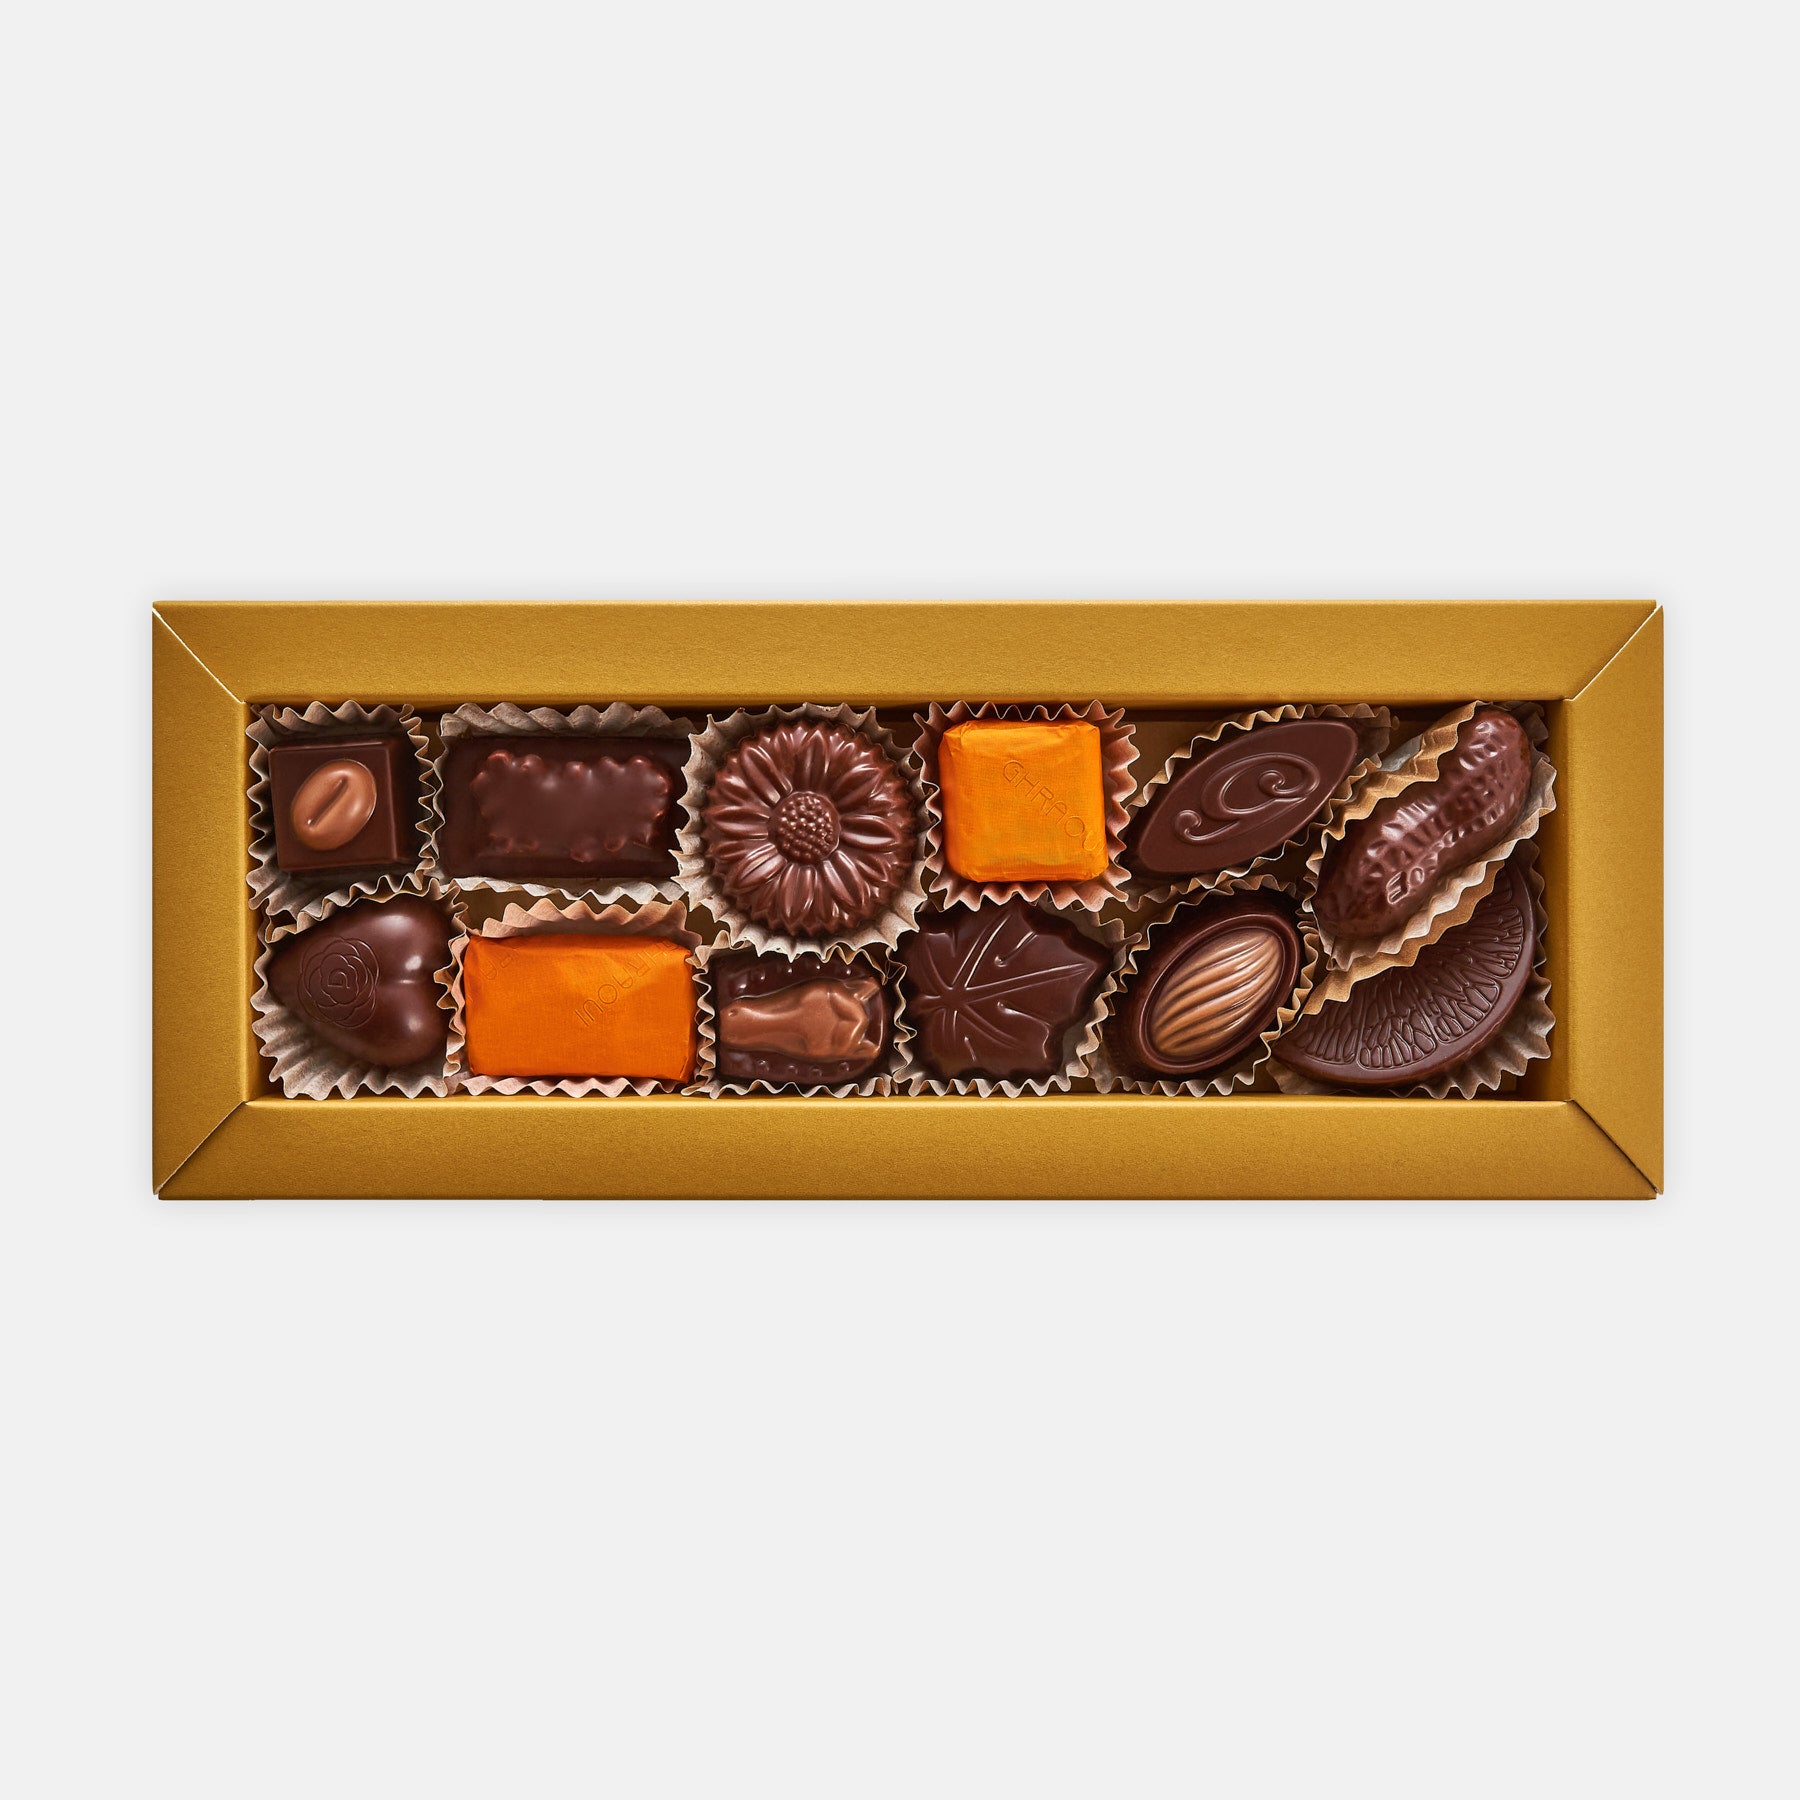 Assorted dark chocolate selection